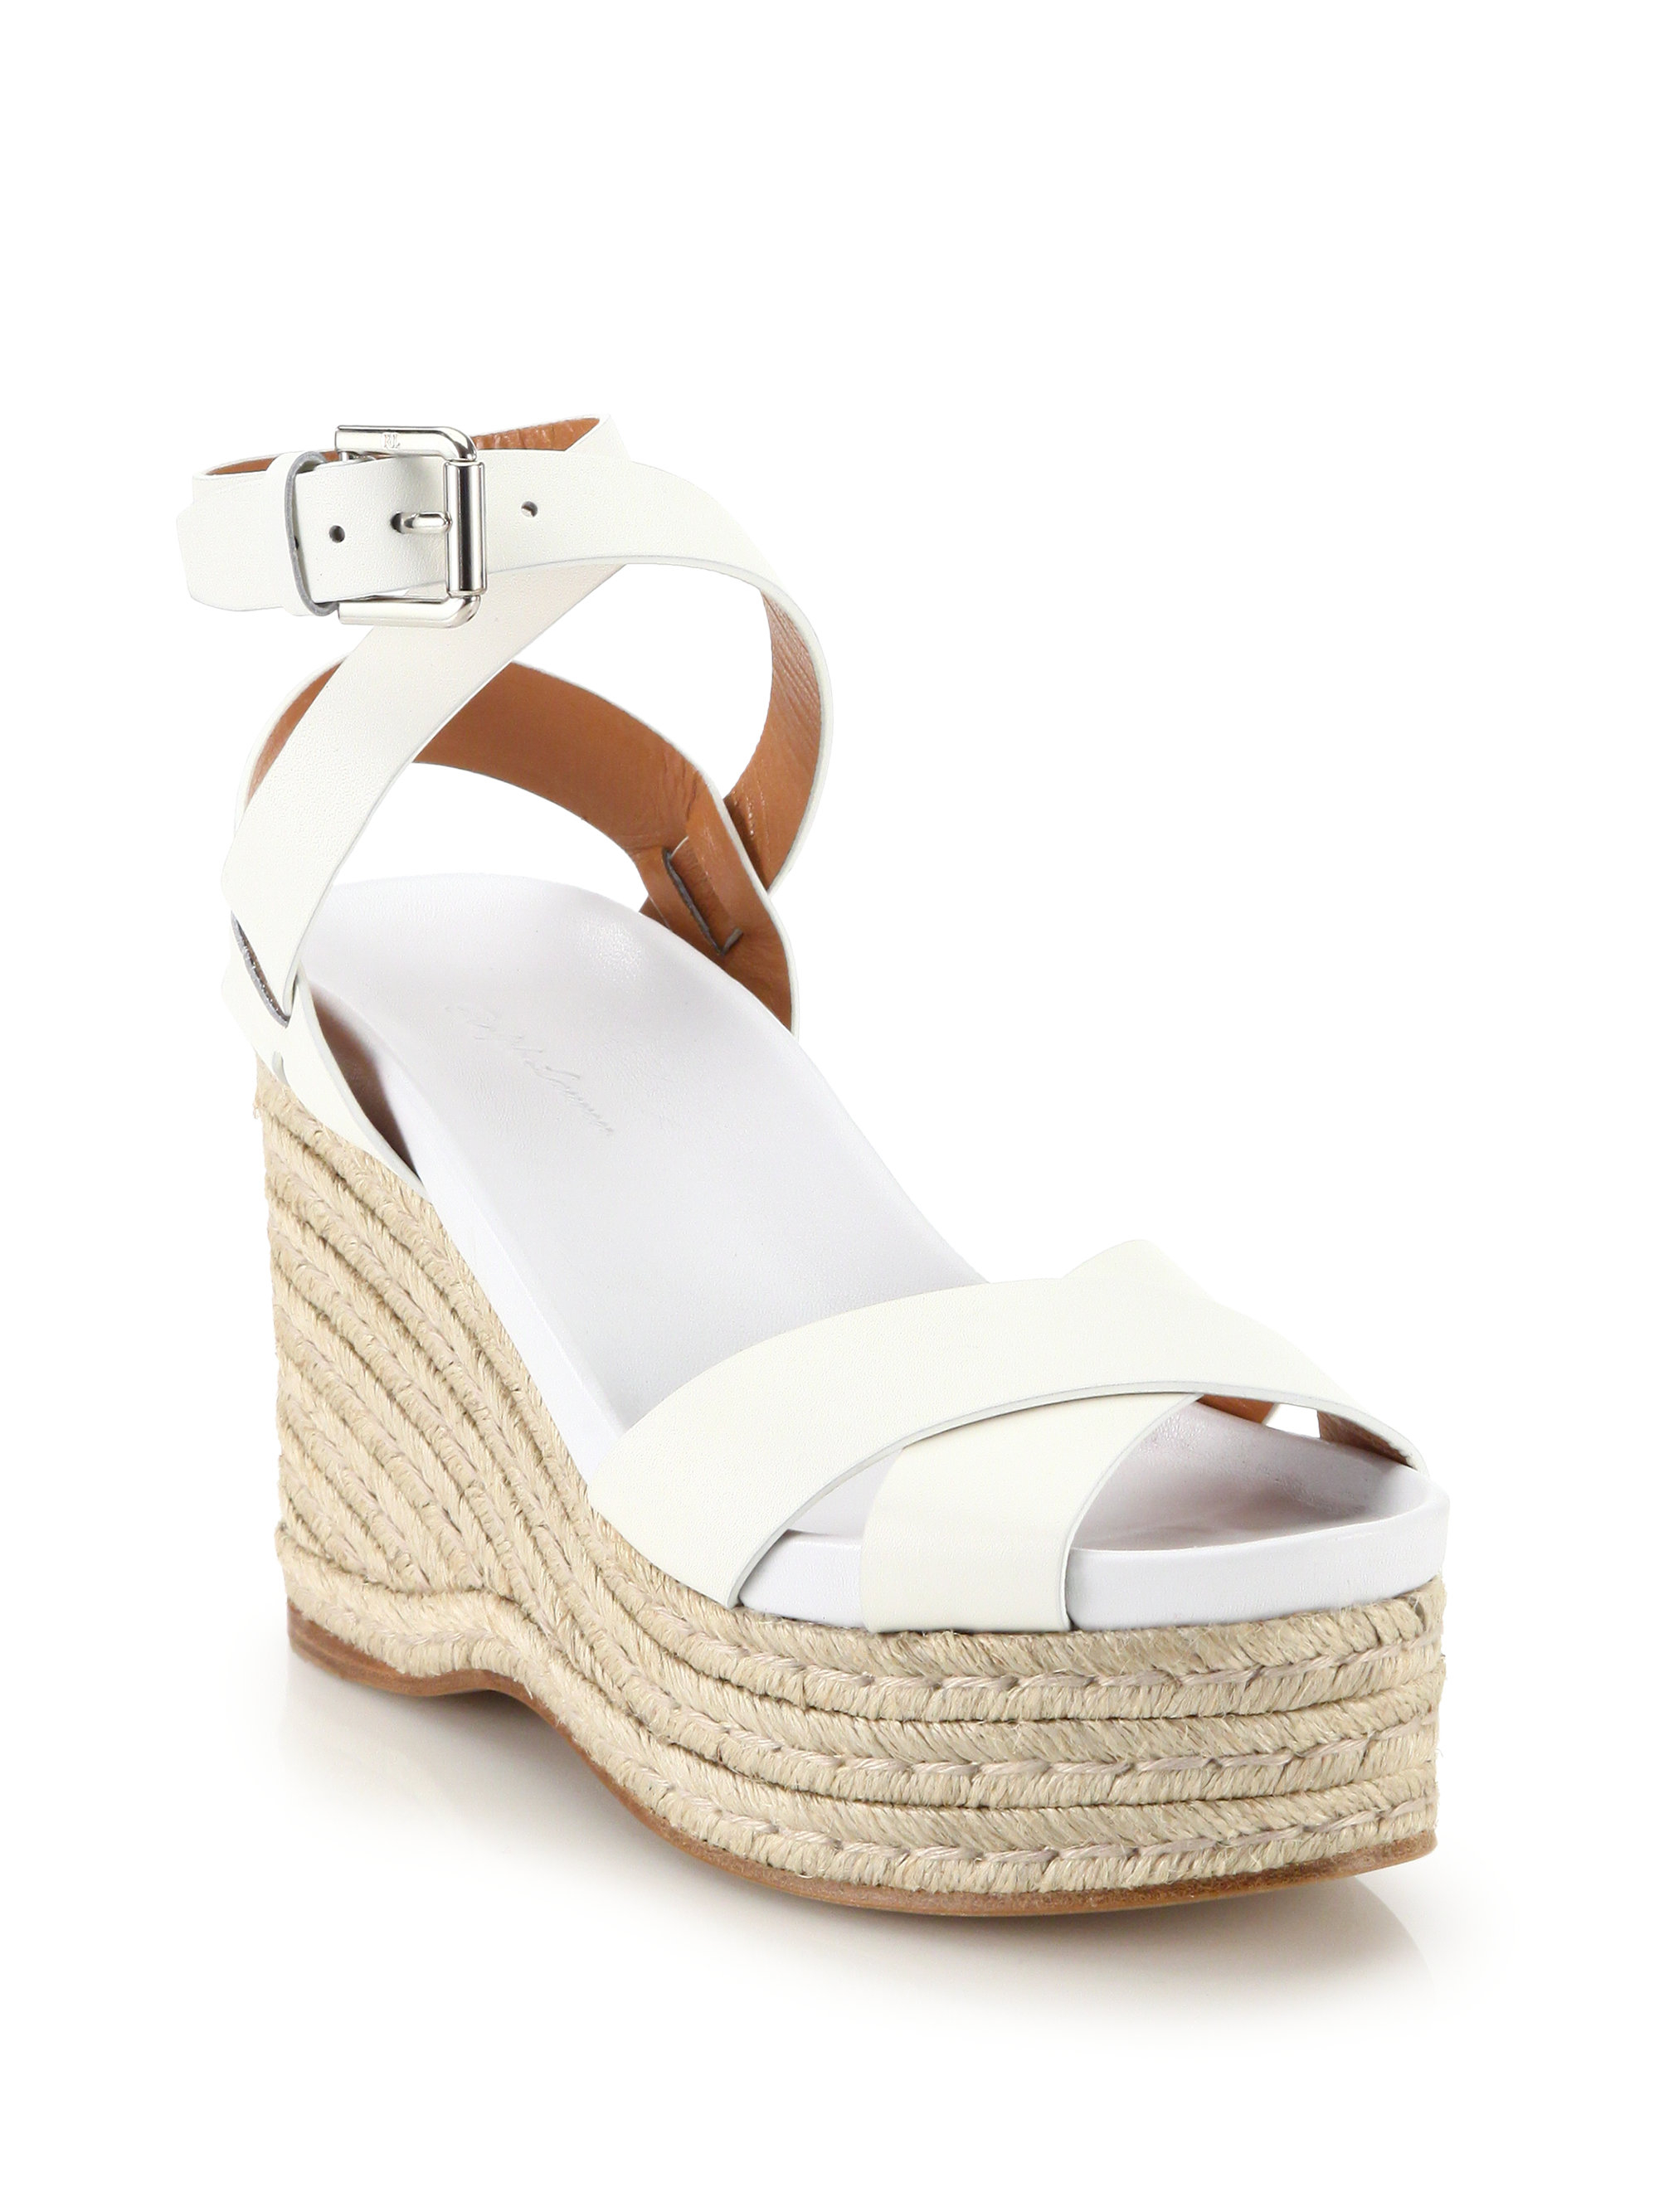 Lyst - Ralph Lauren Lois Espadrille Leather Wedge Sandals in White